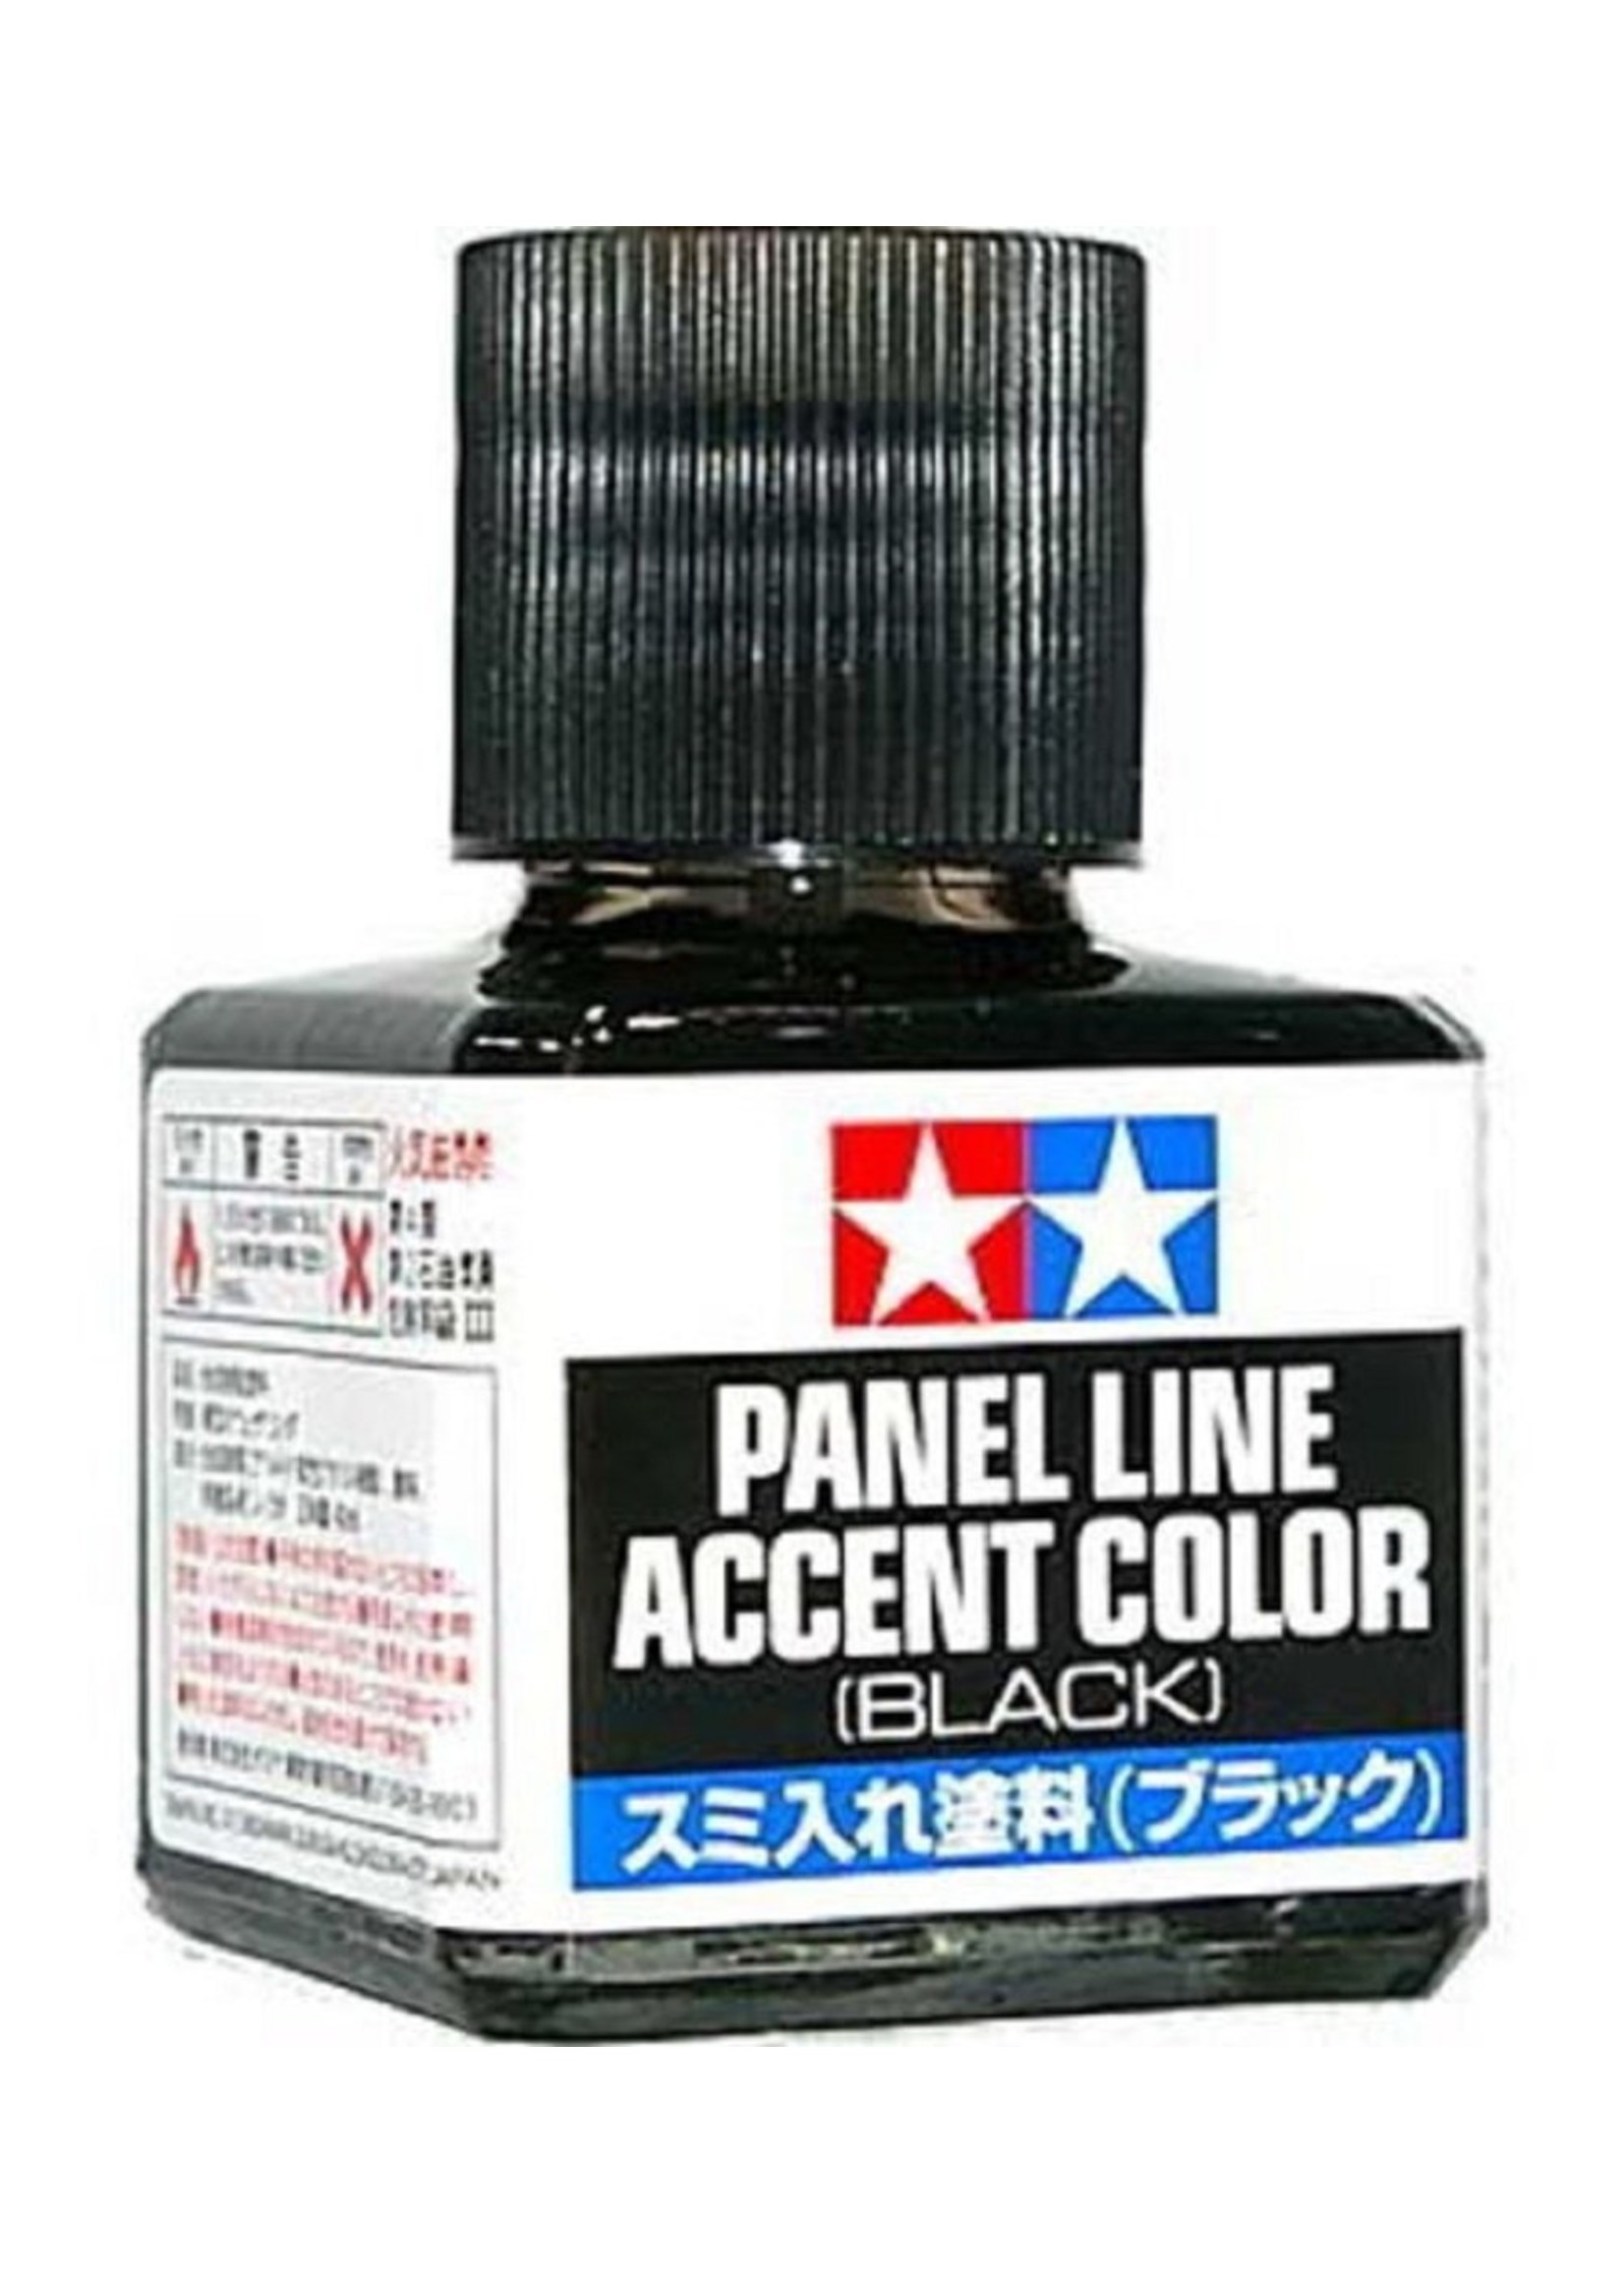 Tamiya Panel Line Accent Color